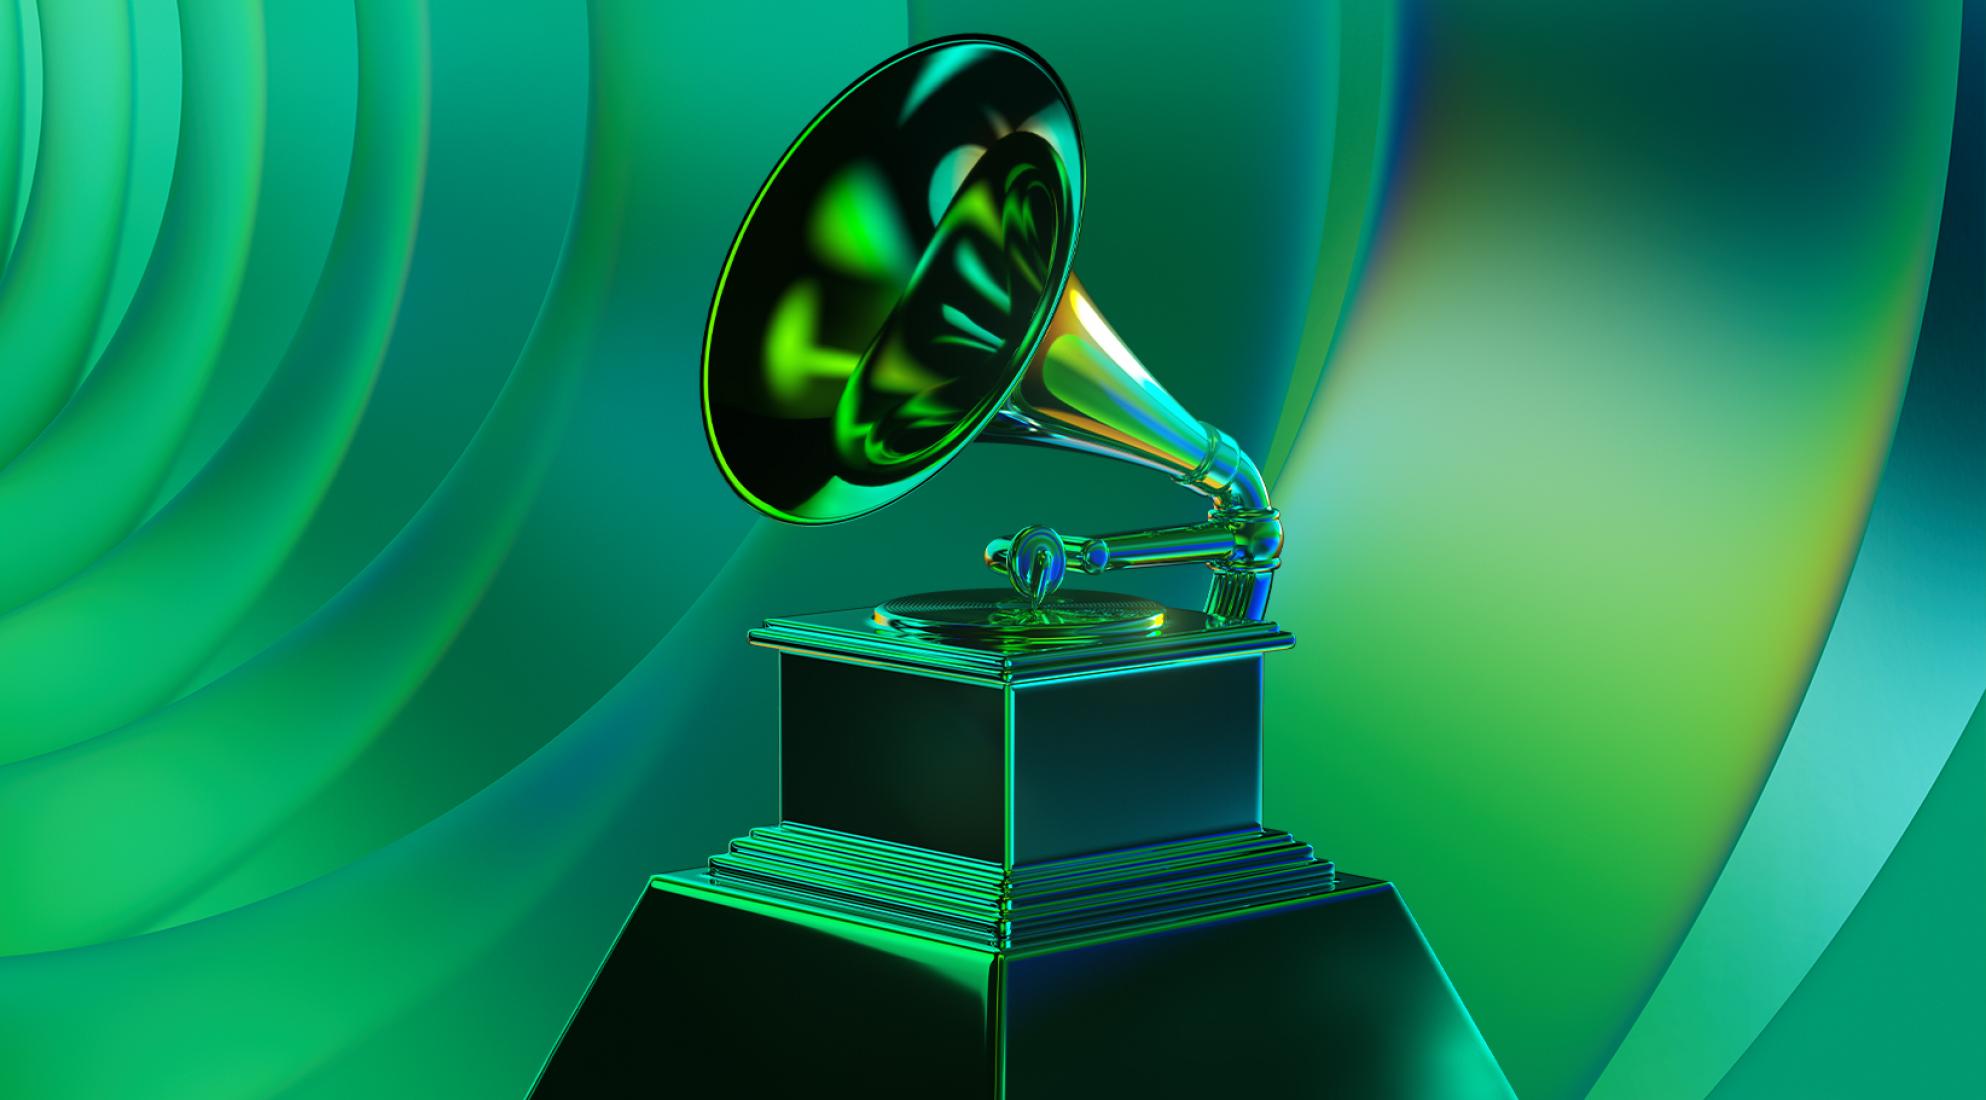 Image of the Grammy award